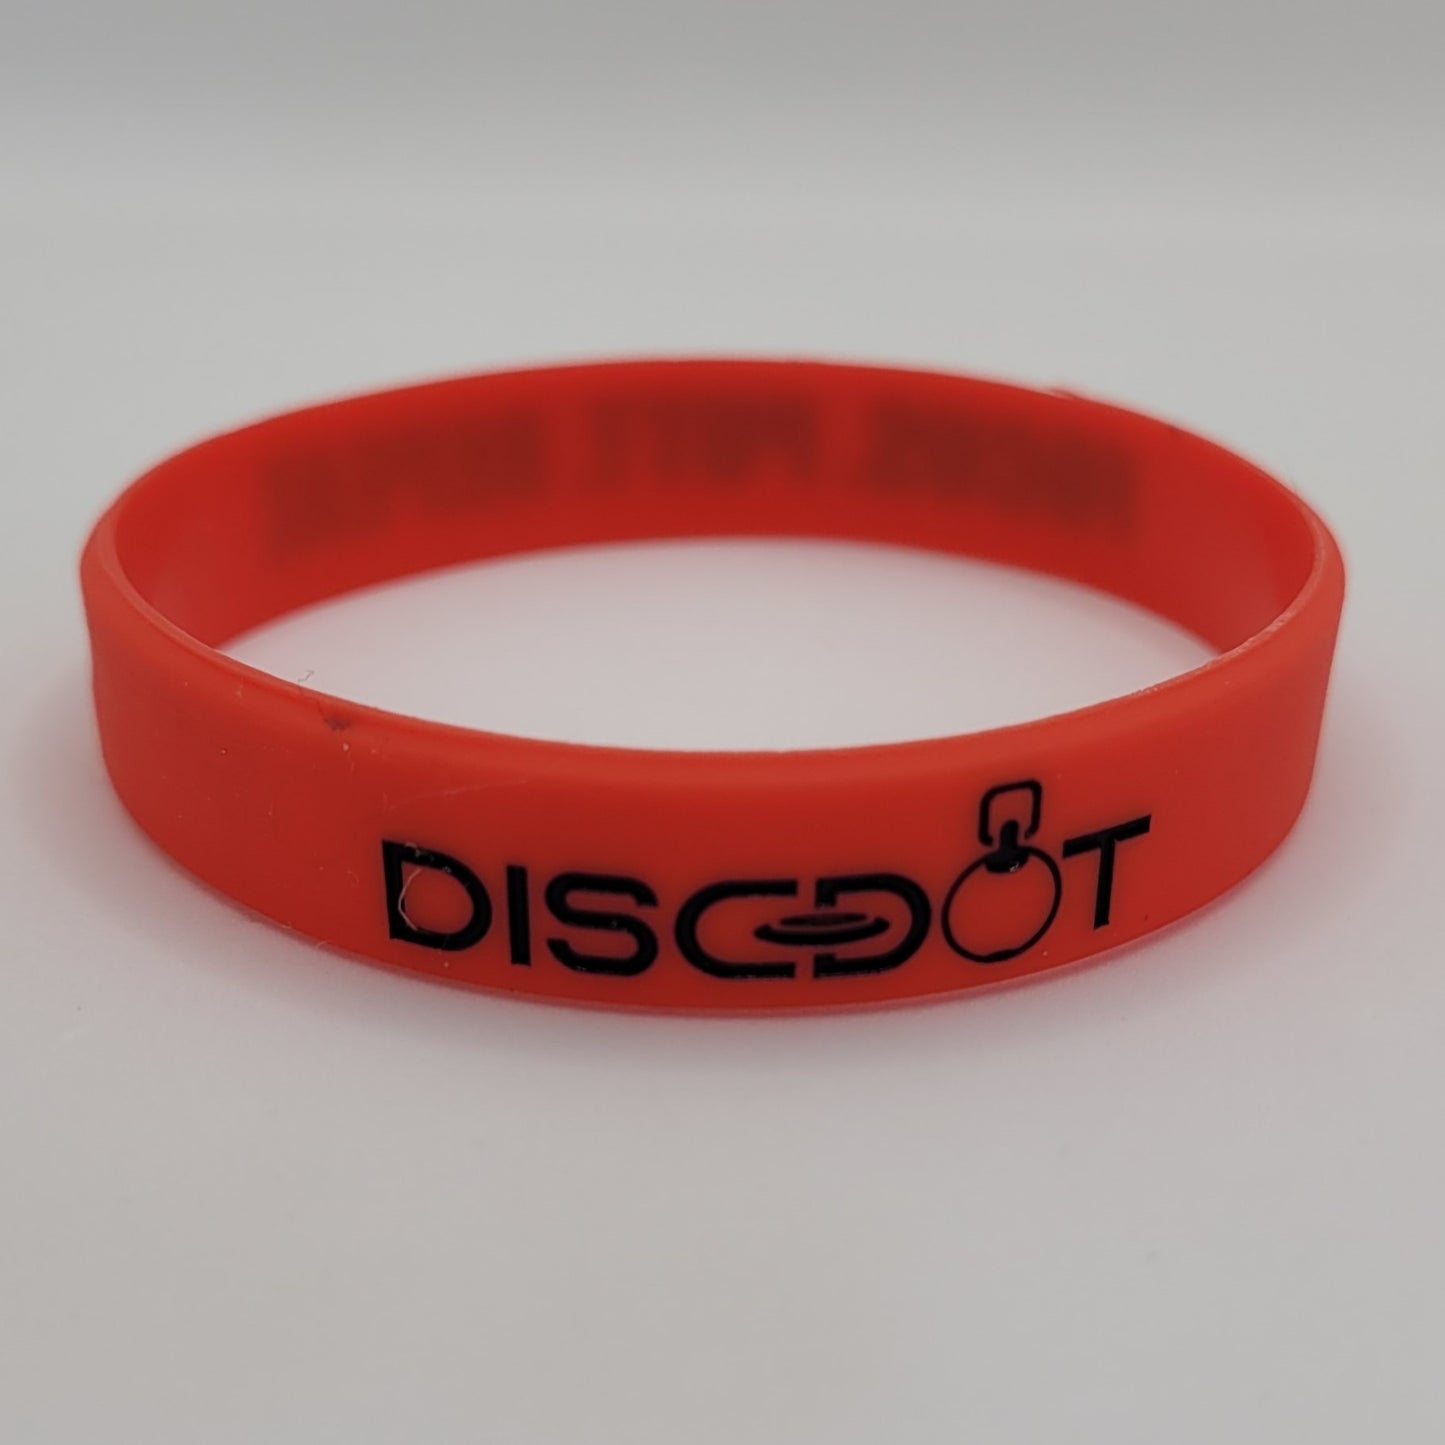 DiscDot Wristband